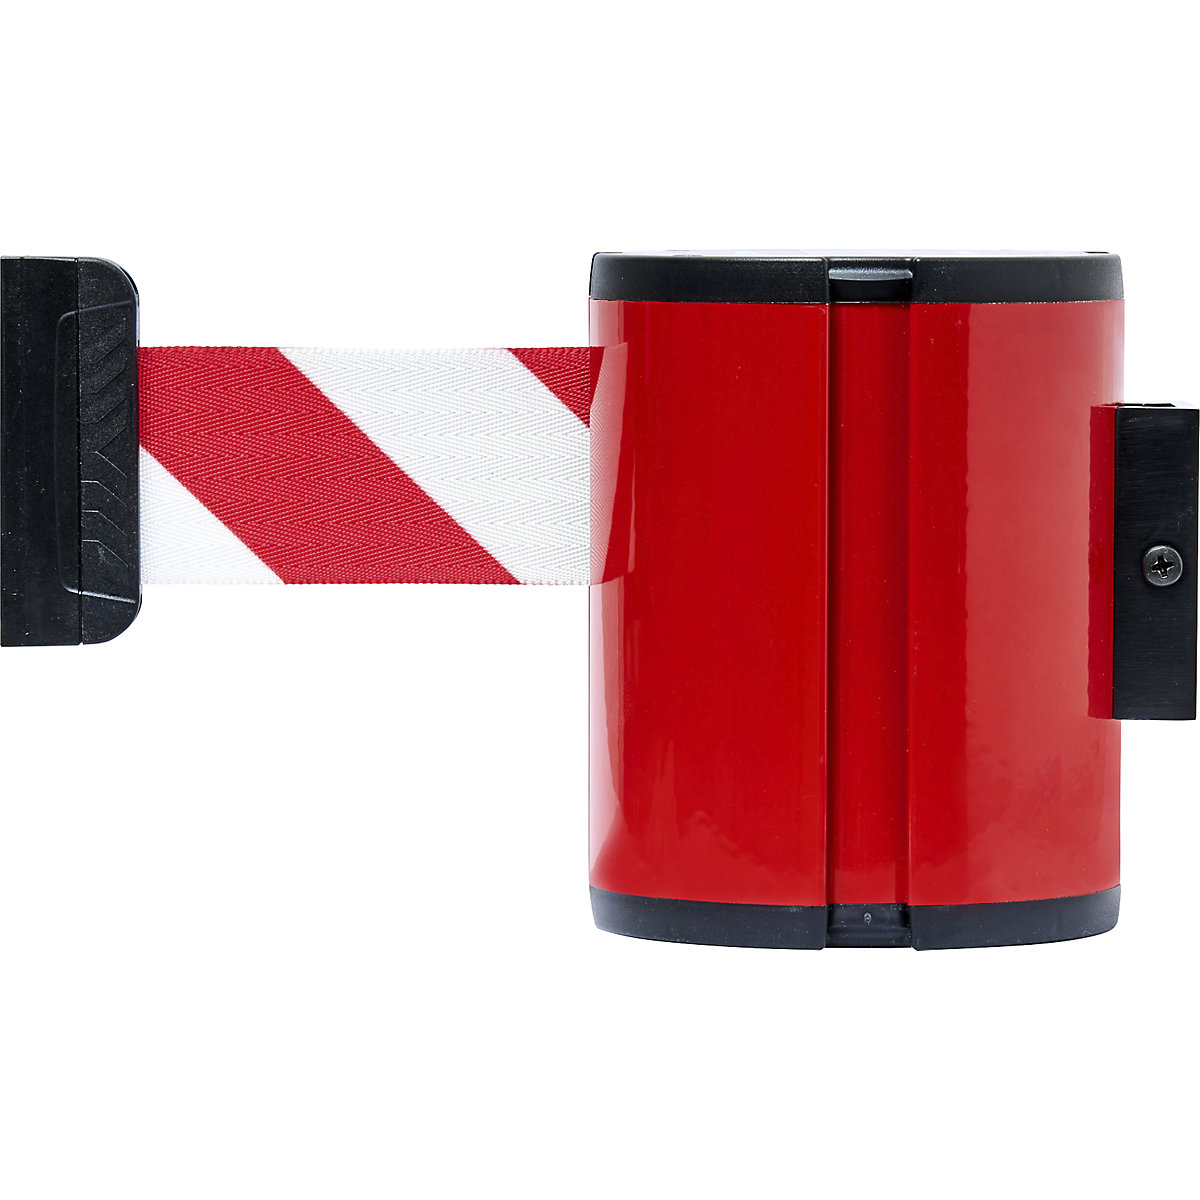 Gurtkassette aus Aluminium, Wall XL, Gurtfarbe Rot/Weiß, Gehäusefarbe Rot